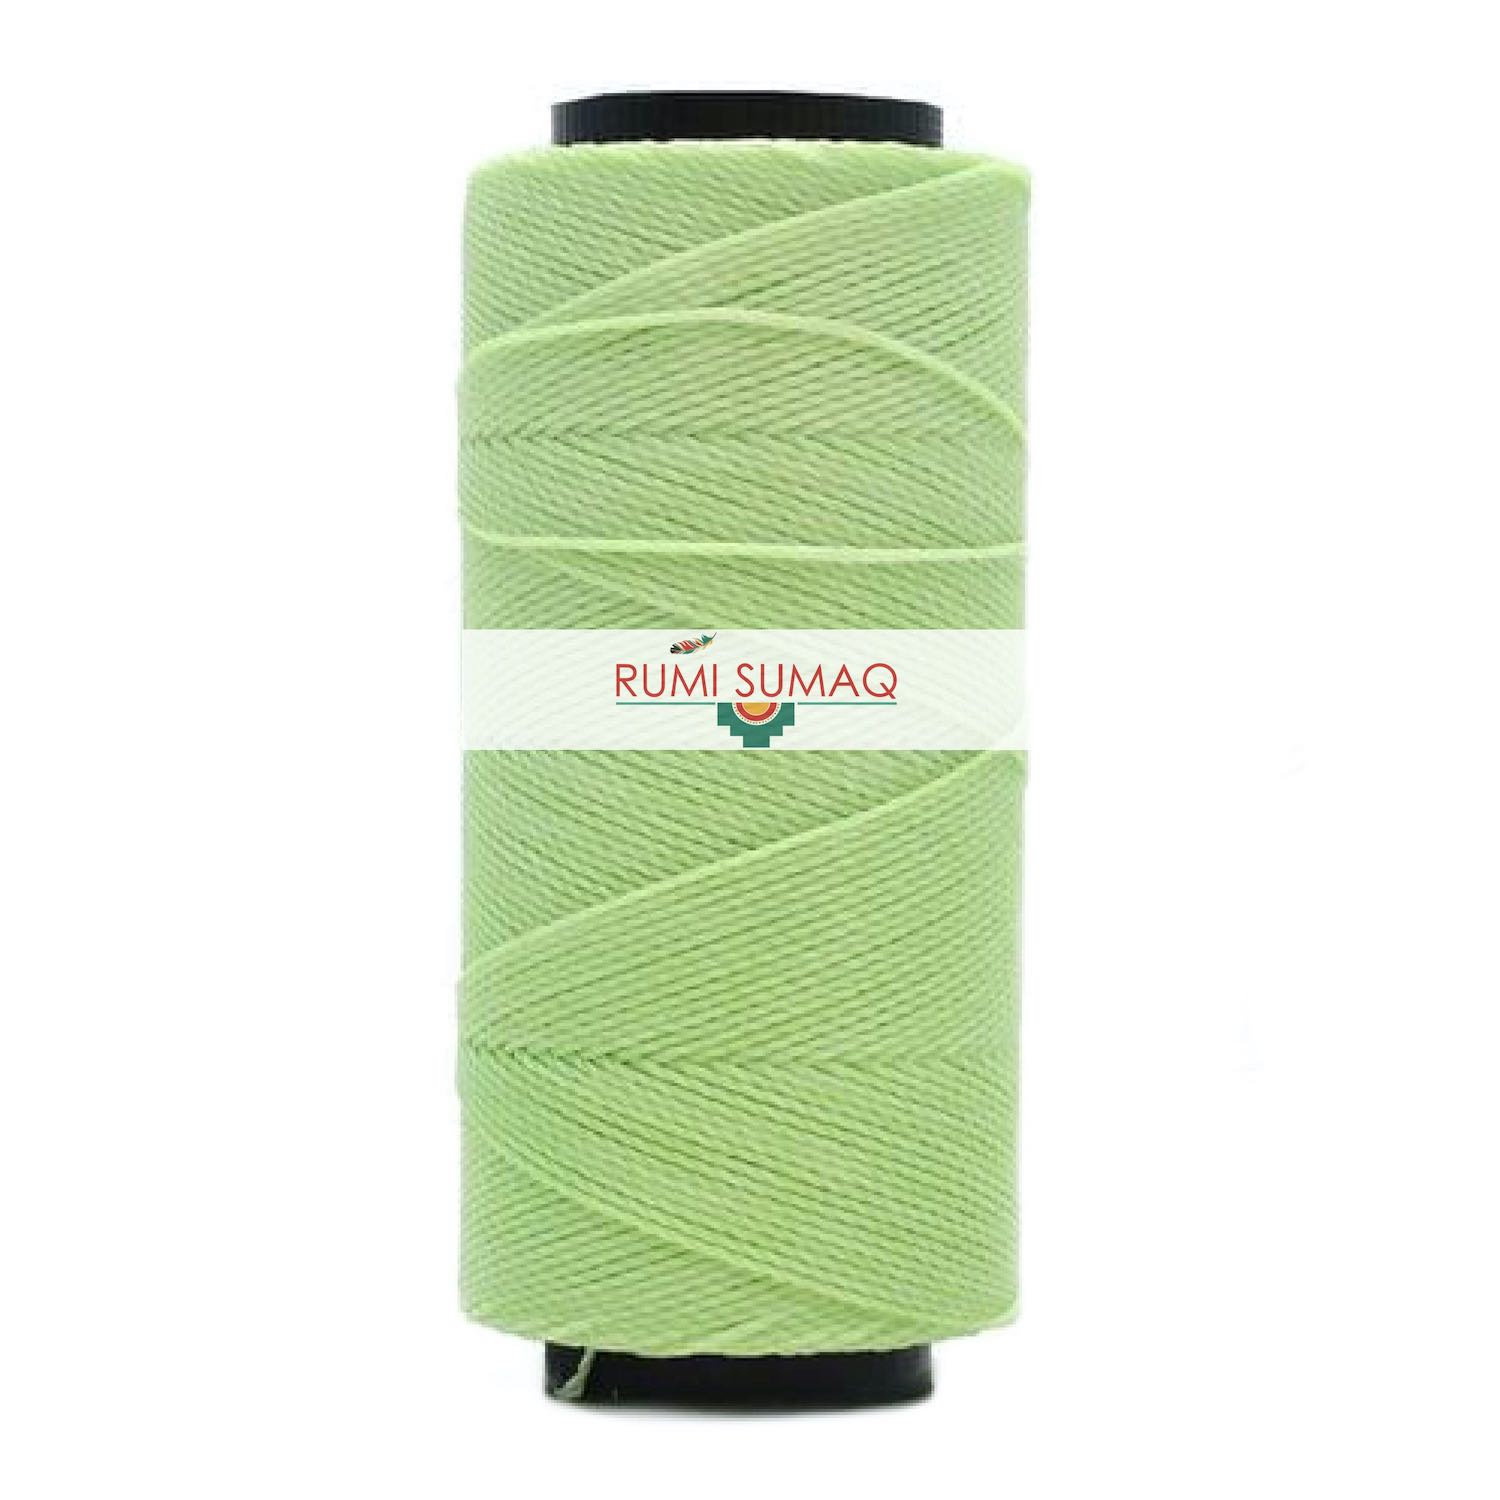 Settanyl 05-1405 waxed polyester cord in celery green (light pastel green) | RUMI SUMAQ Brazilian Waxed Cord Setta Encerada Verde